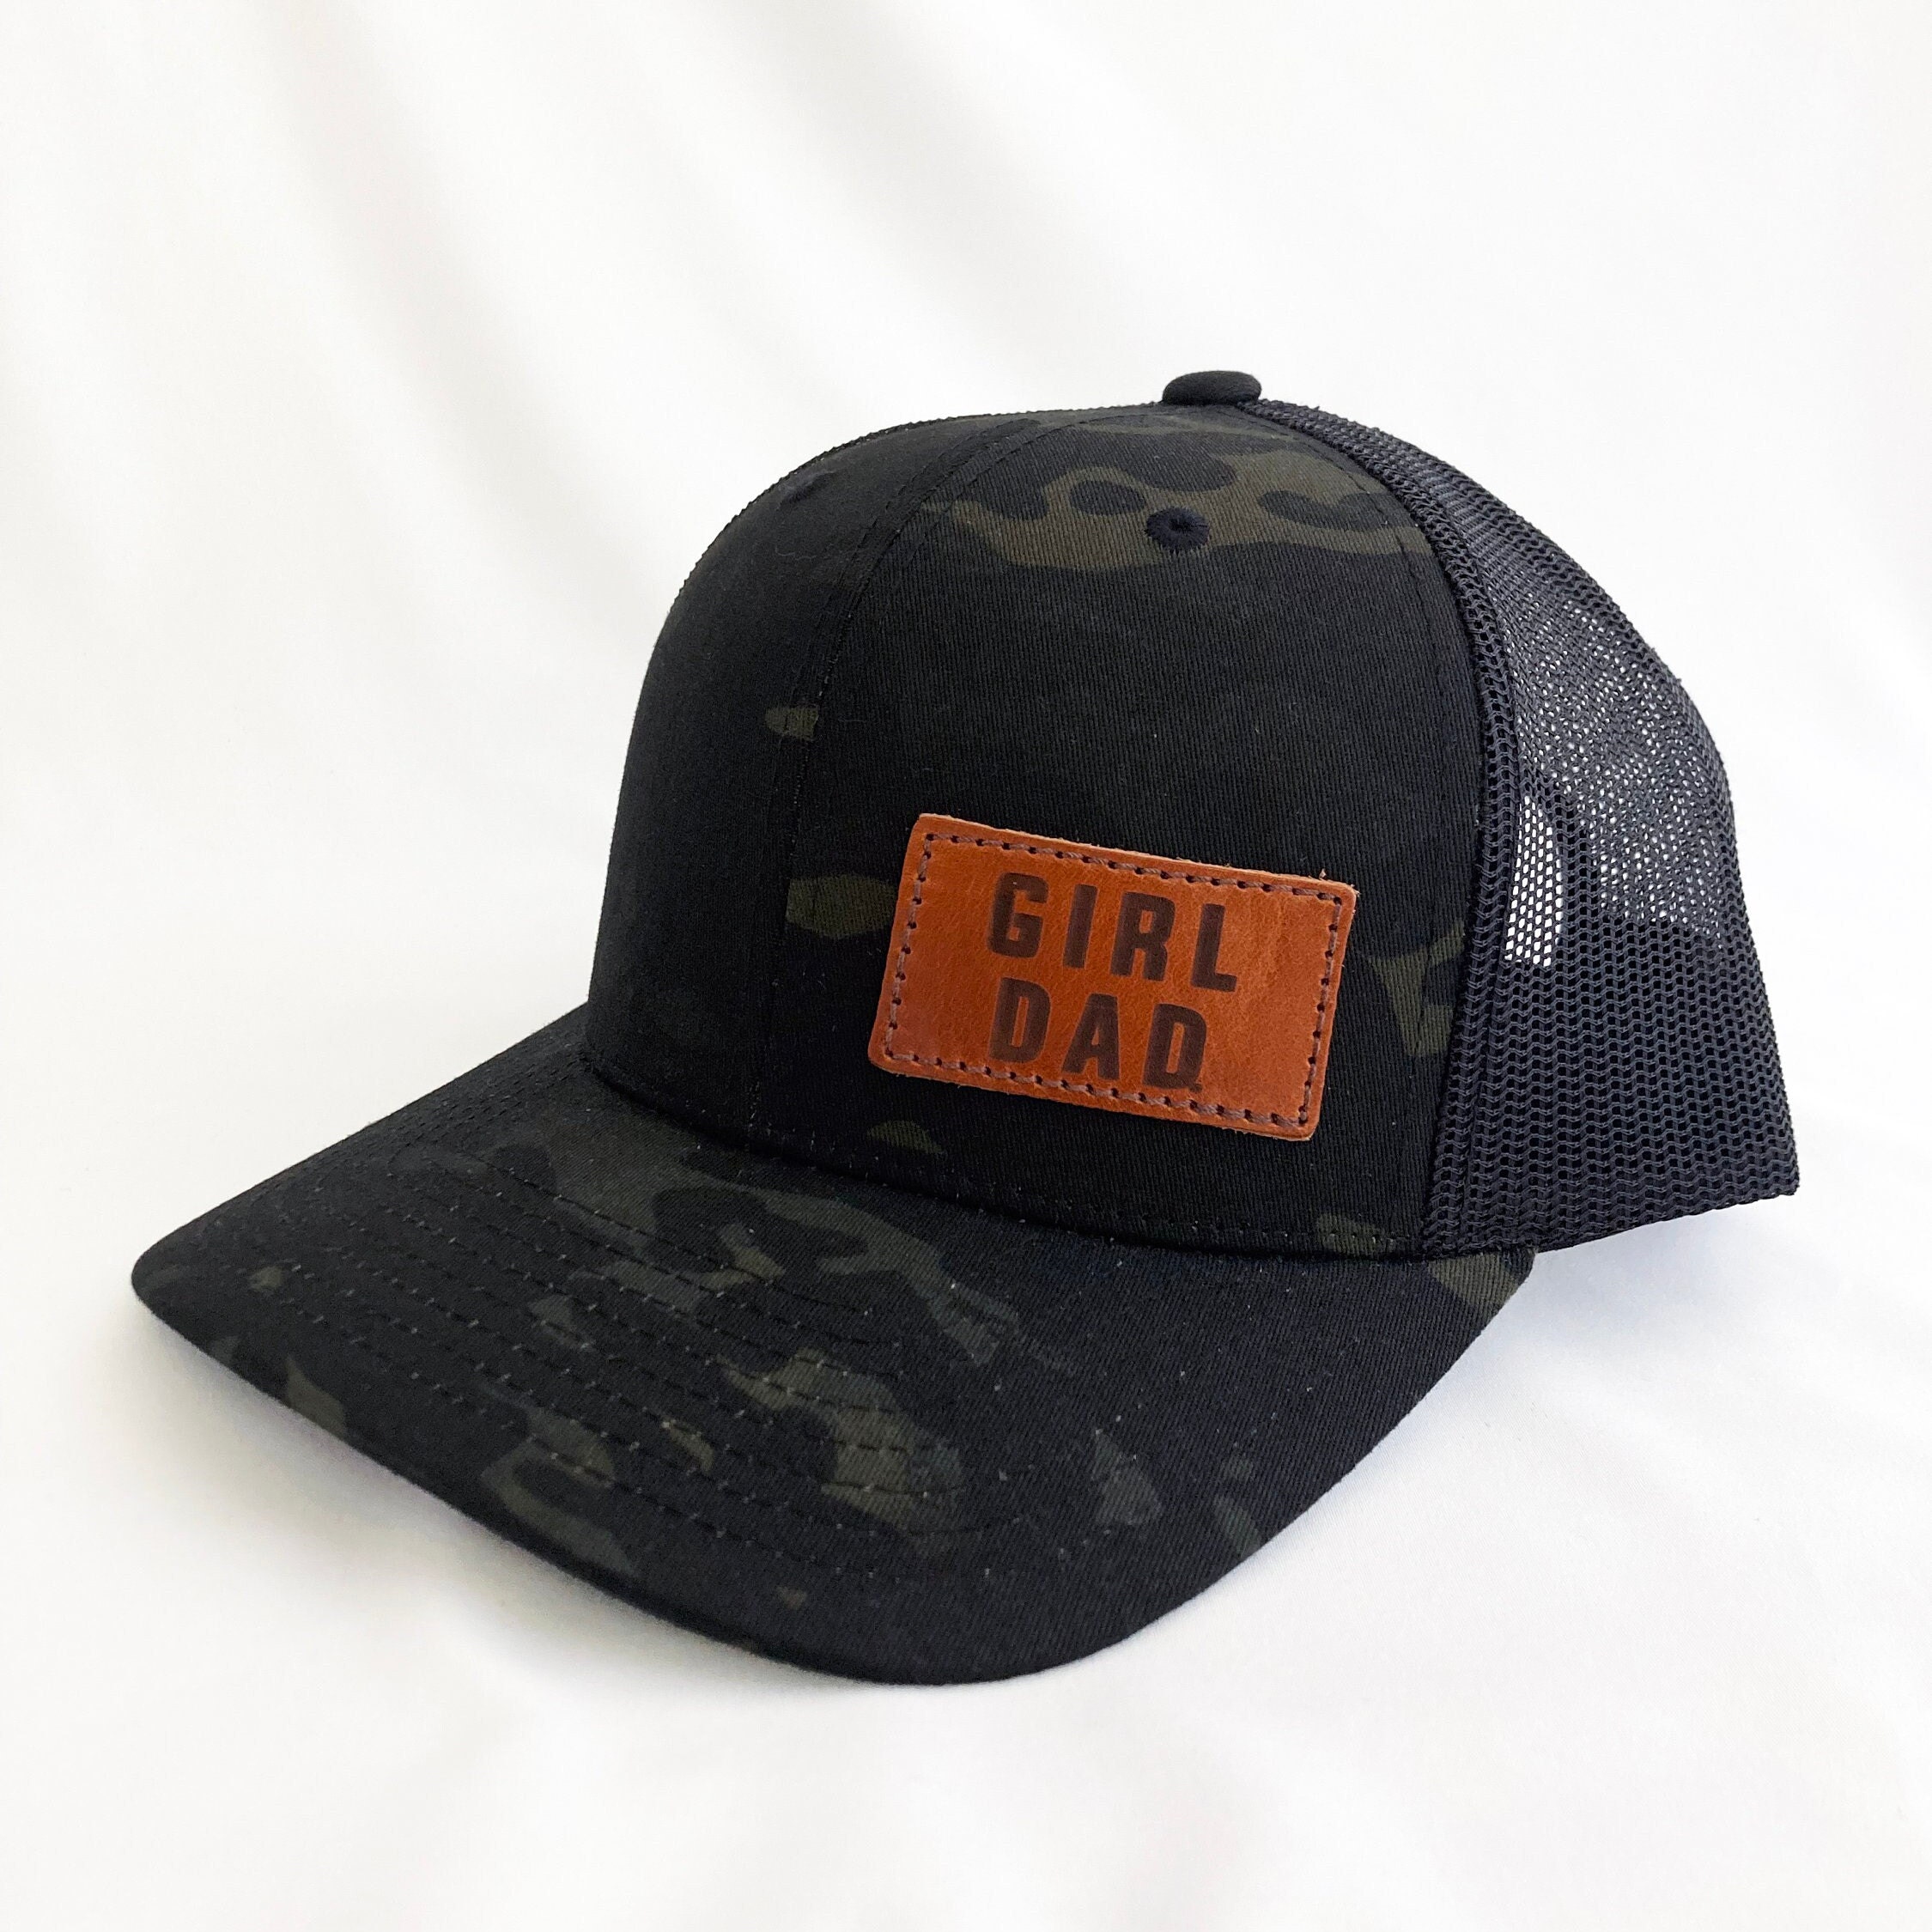 Girldad® Leather Patch Trucker Hat, Offset Camouflage Trucker Hat, Leather  Snapback Hat, Girl Dad, Girl Dad Gift, Dad of Girls, Dad Gift -  Canada